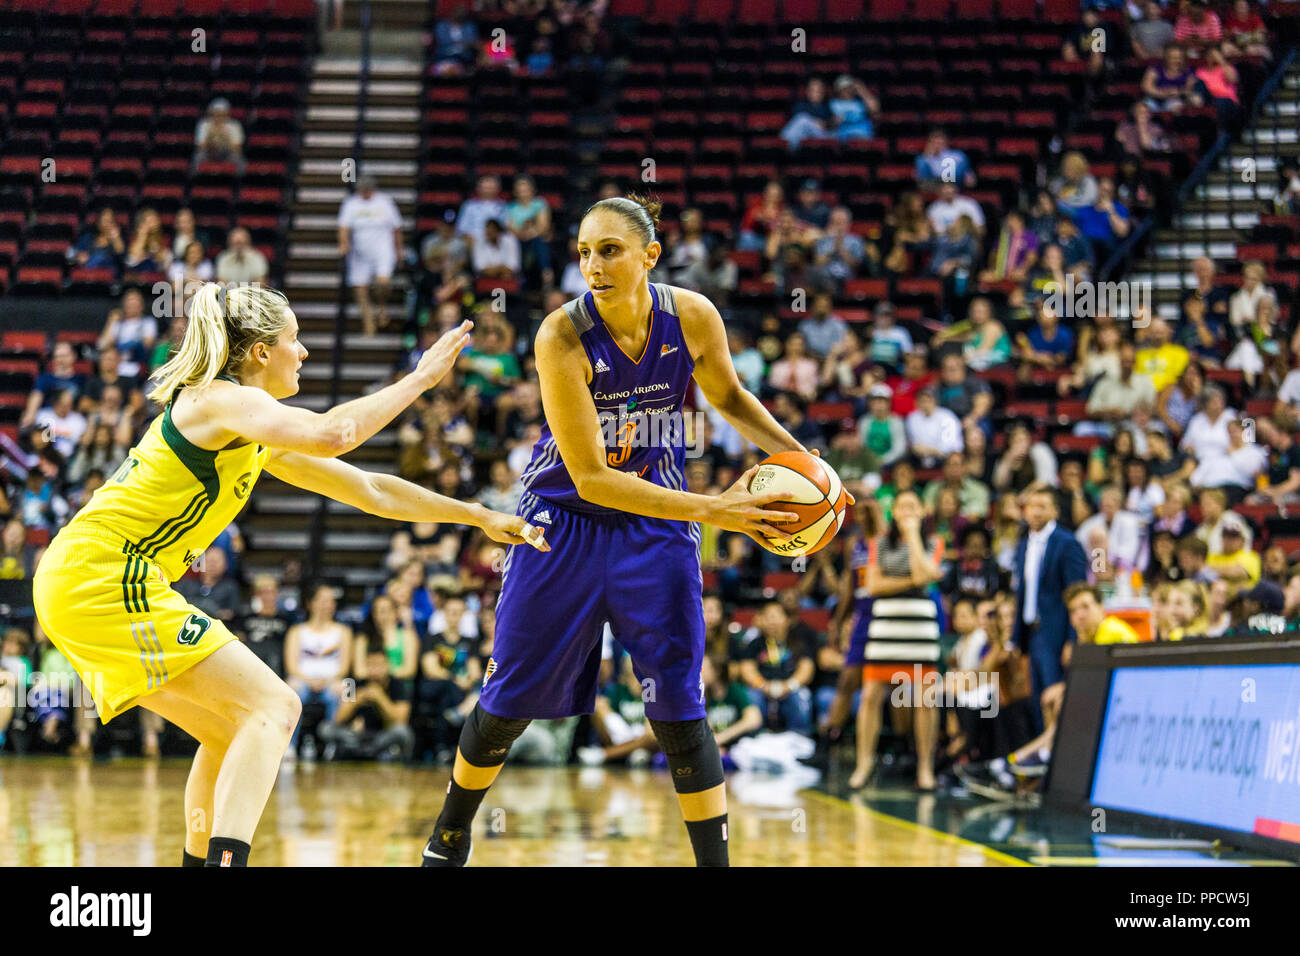 Two female basketball players of opposing teams during game, Seattle, Washington, USA Stock Photo